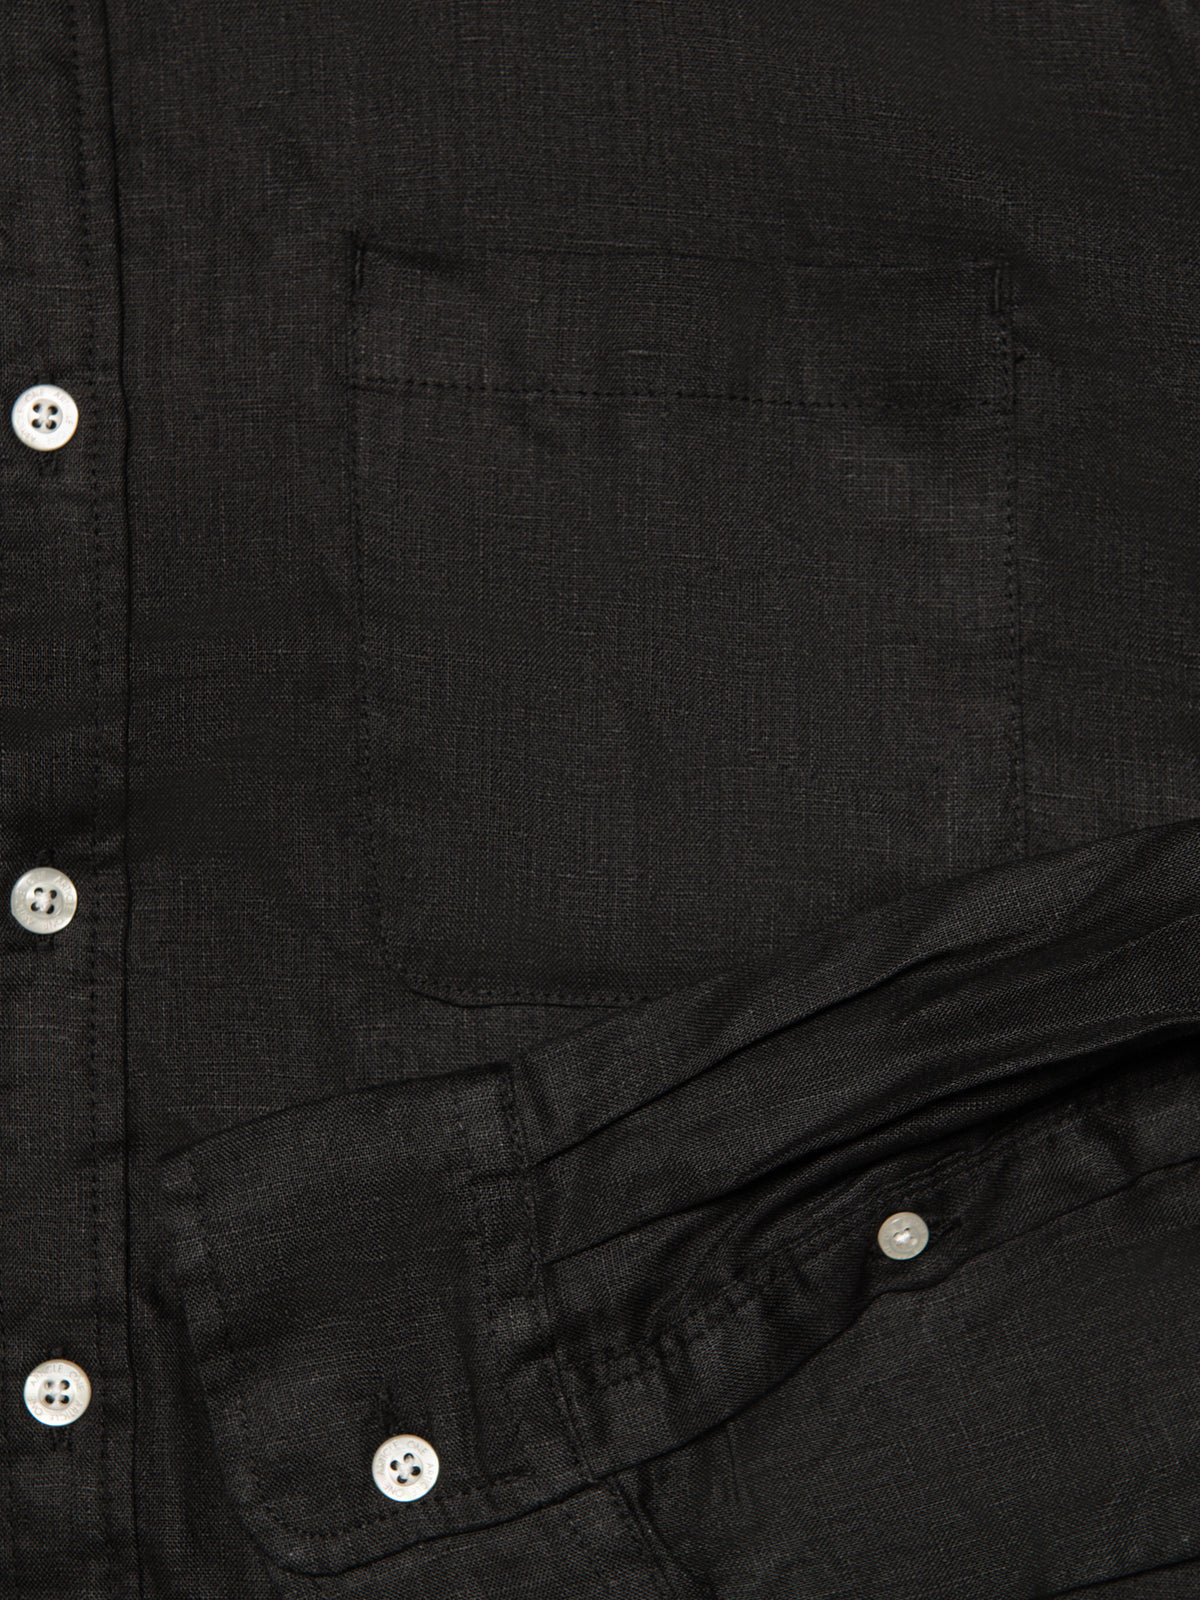 Nero Linen Long Sleeve Shirt in Black